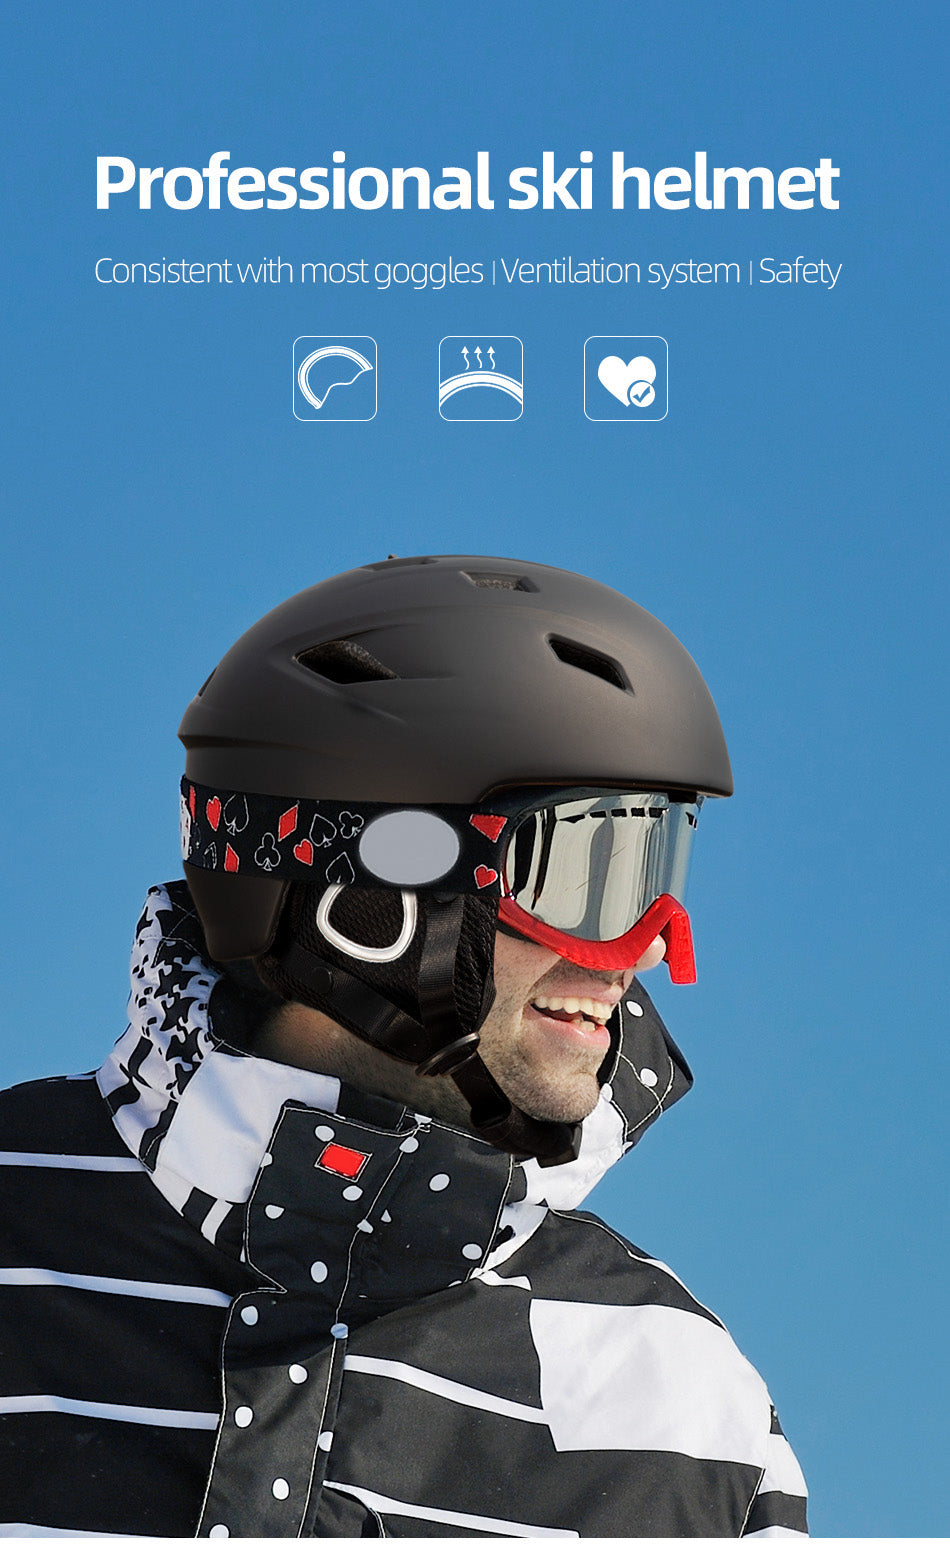 Men Women ski helmet Half-coverage Snowboard Moto snowmobile Safety Snow Helmet Winter Warm Helmet For Adult and Kids The Clothing Company Sydney